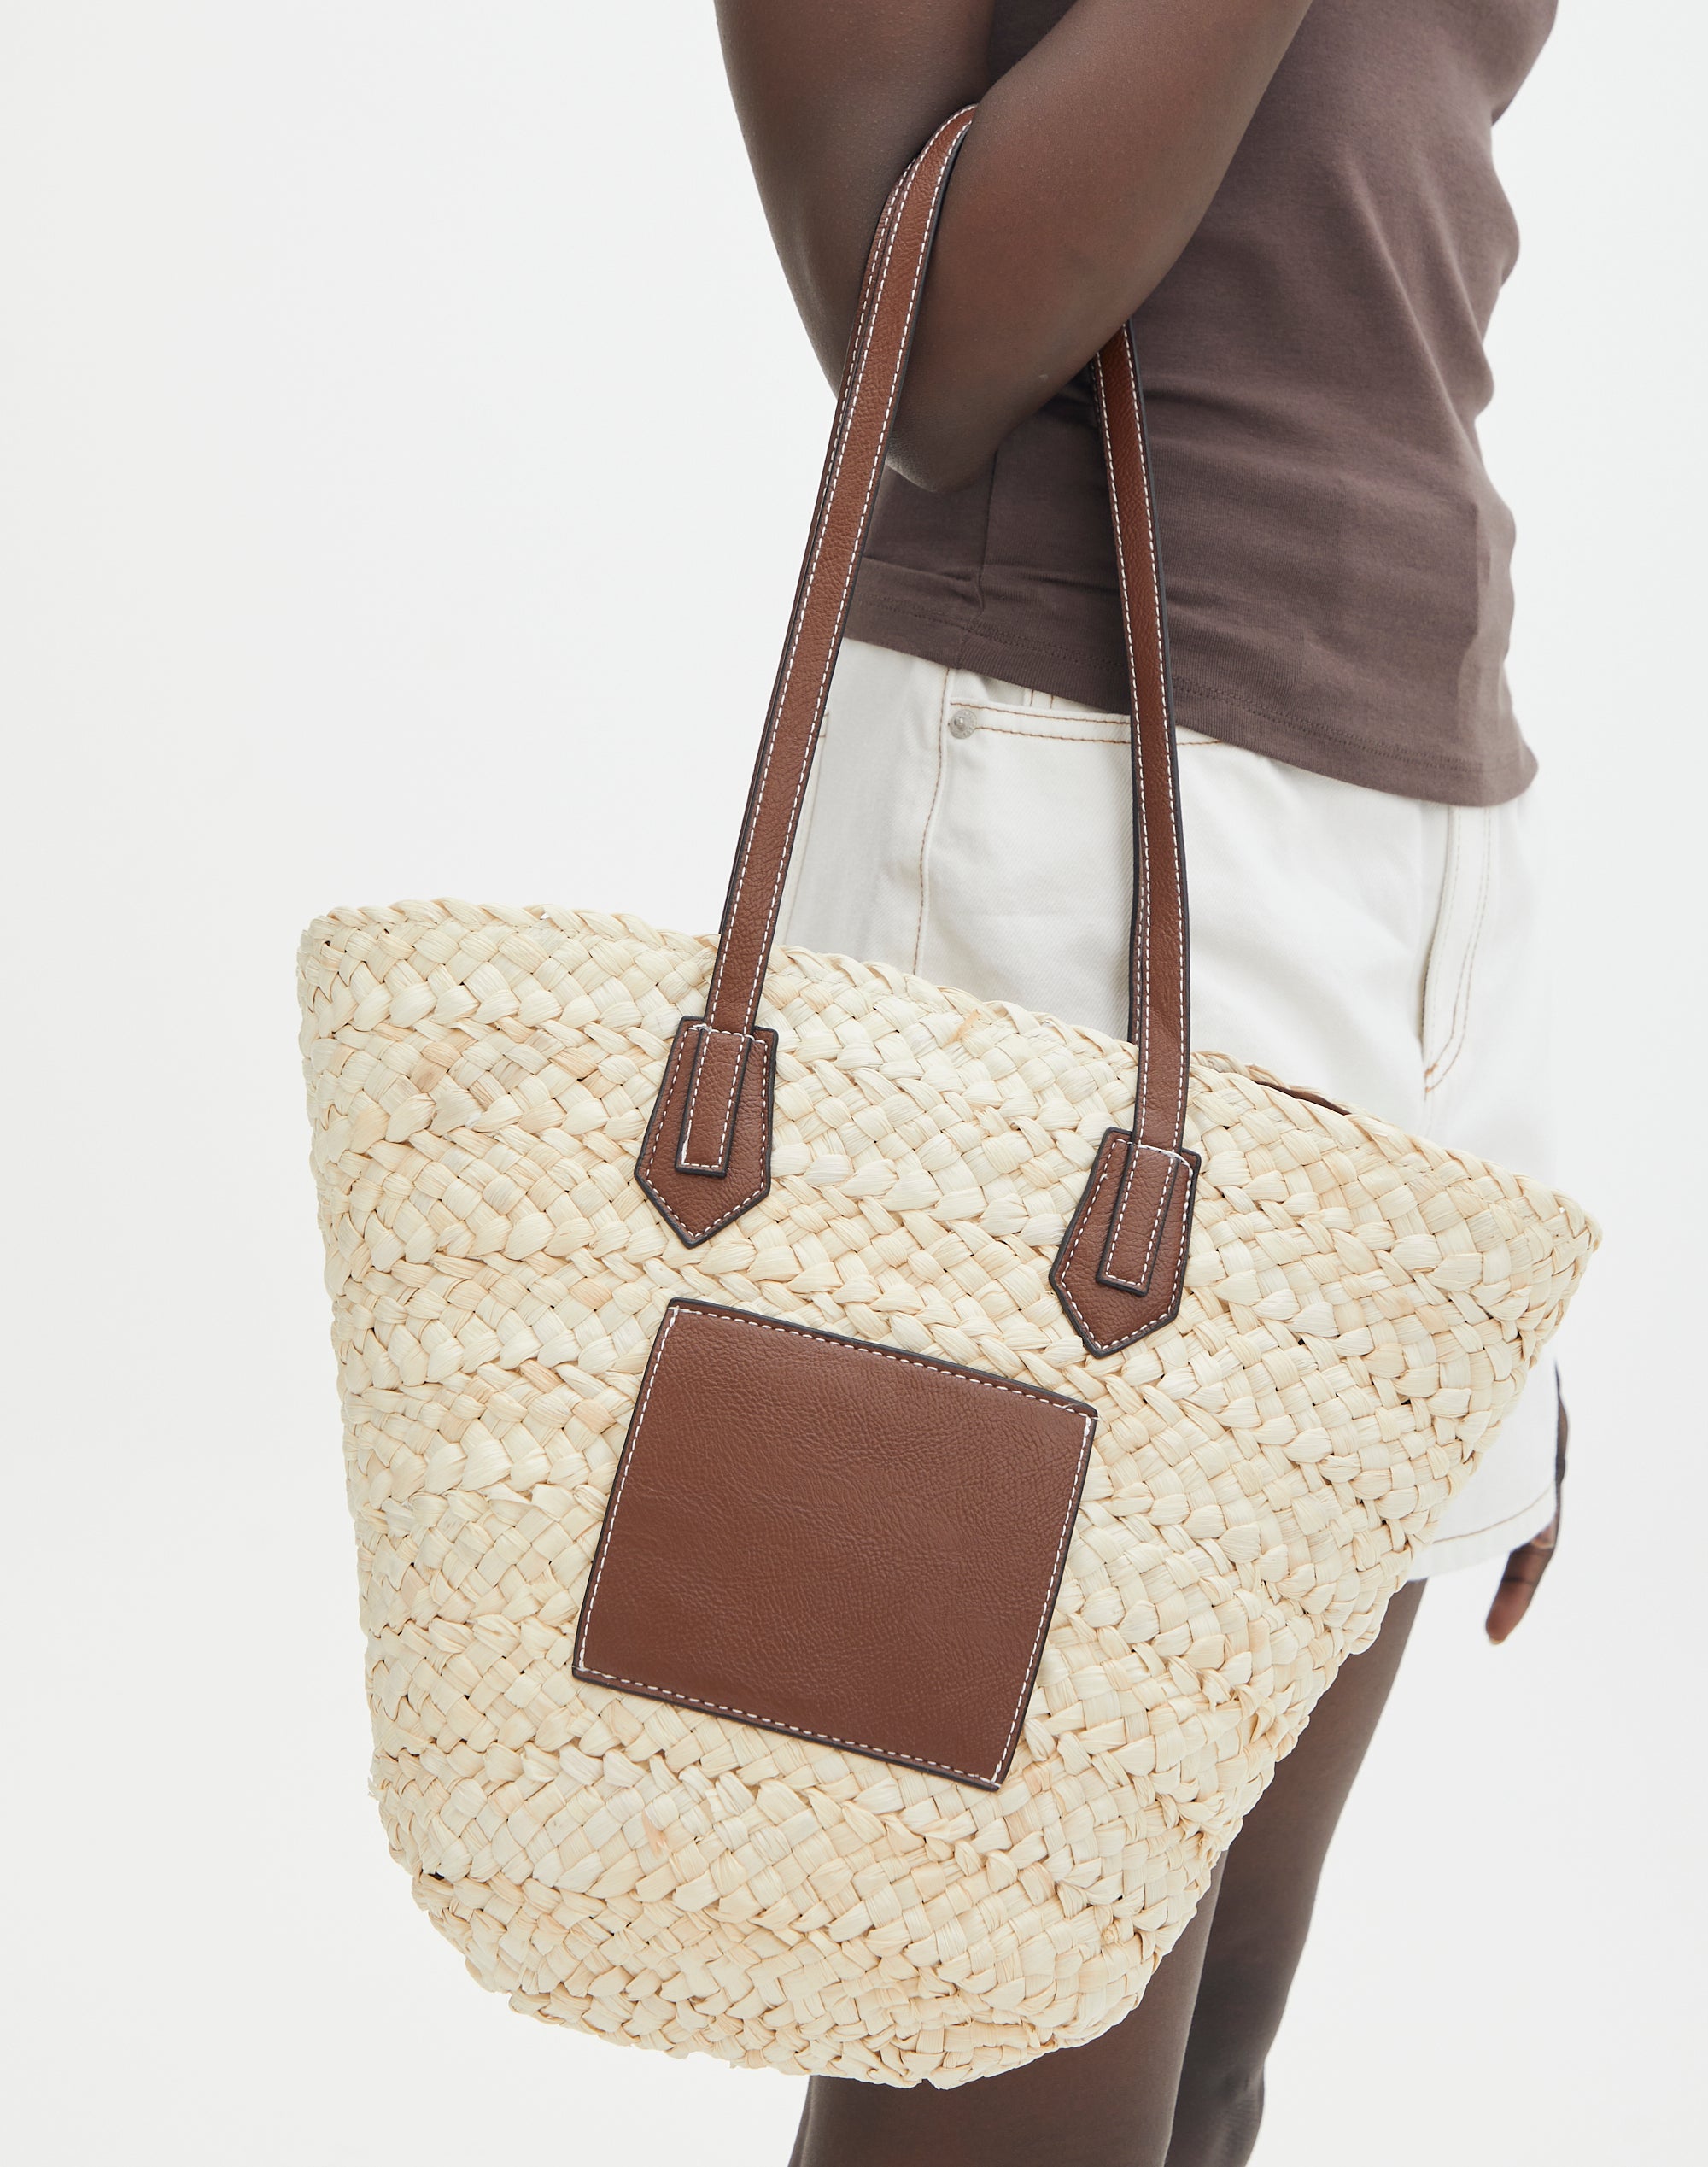 Capelli Straworld Tan/Brown Woven Straw Purse Handbag Beaded Handles Earth  tones - NK Industries LTD